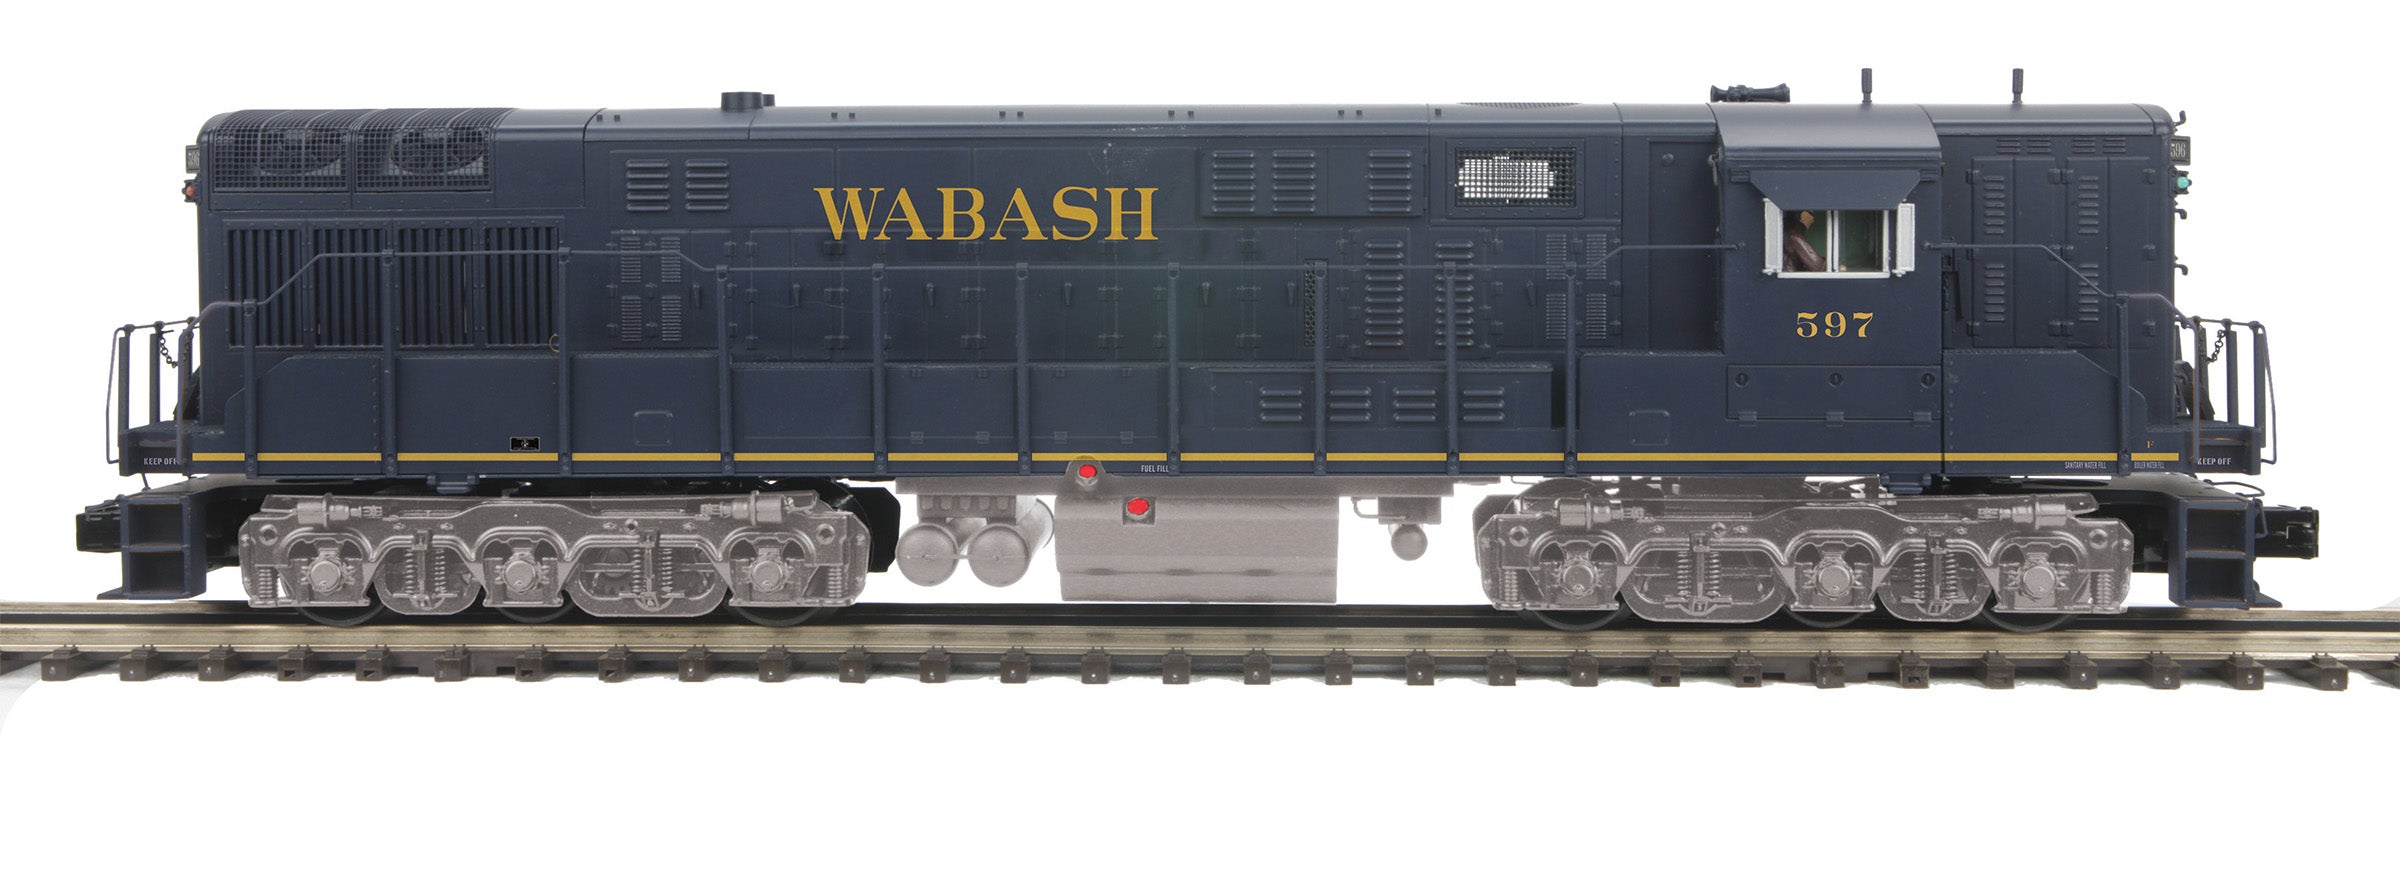 MTH 20-21705-1 - FM Train Master Diesel Engine "Wabash" #597 w/ PS3 (Hi-Rail Wheels) - Custom Run for MrMuffin'sTrains